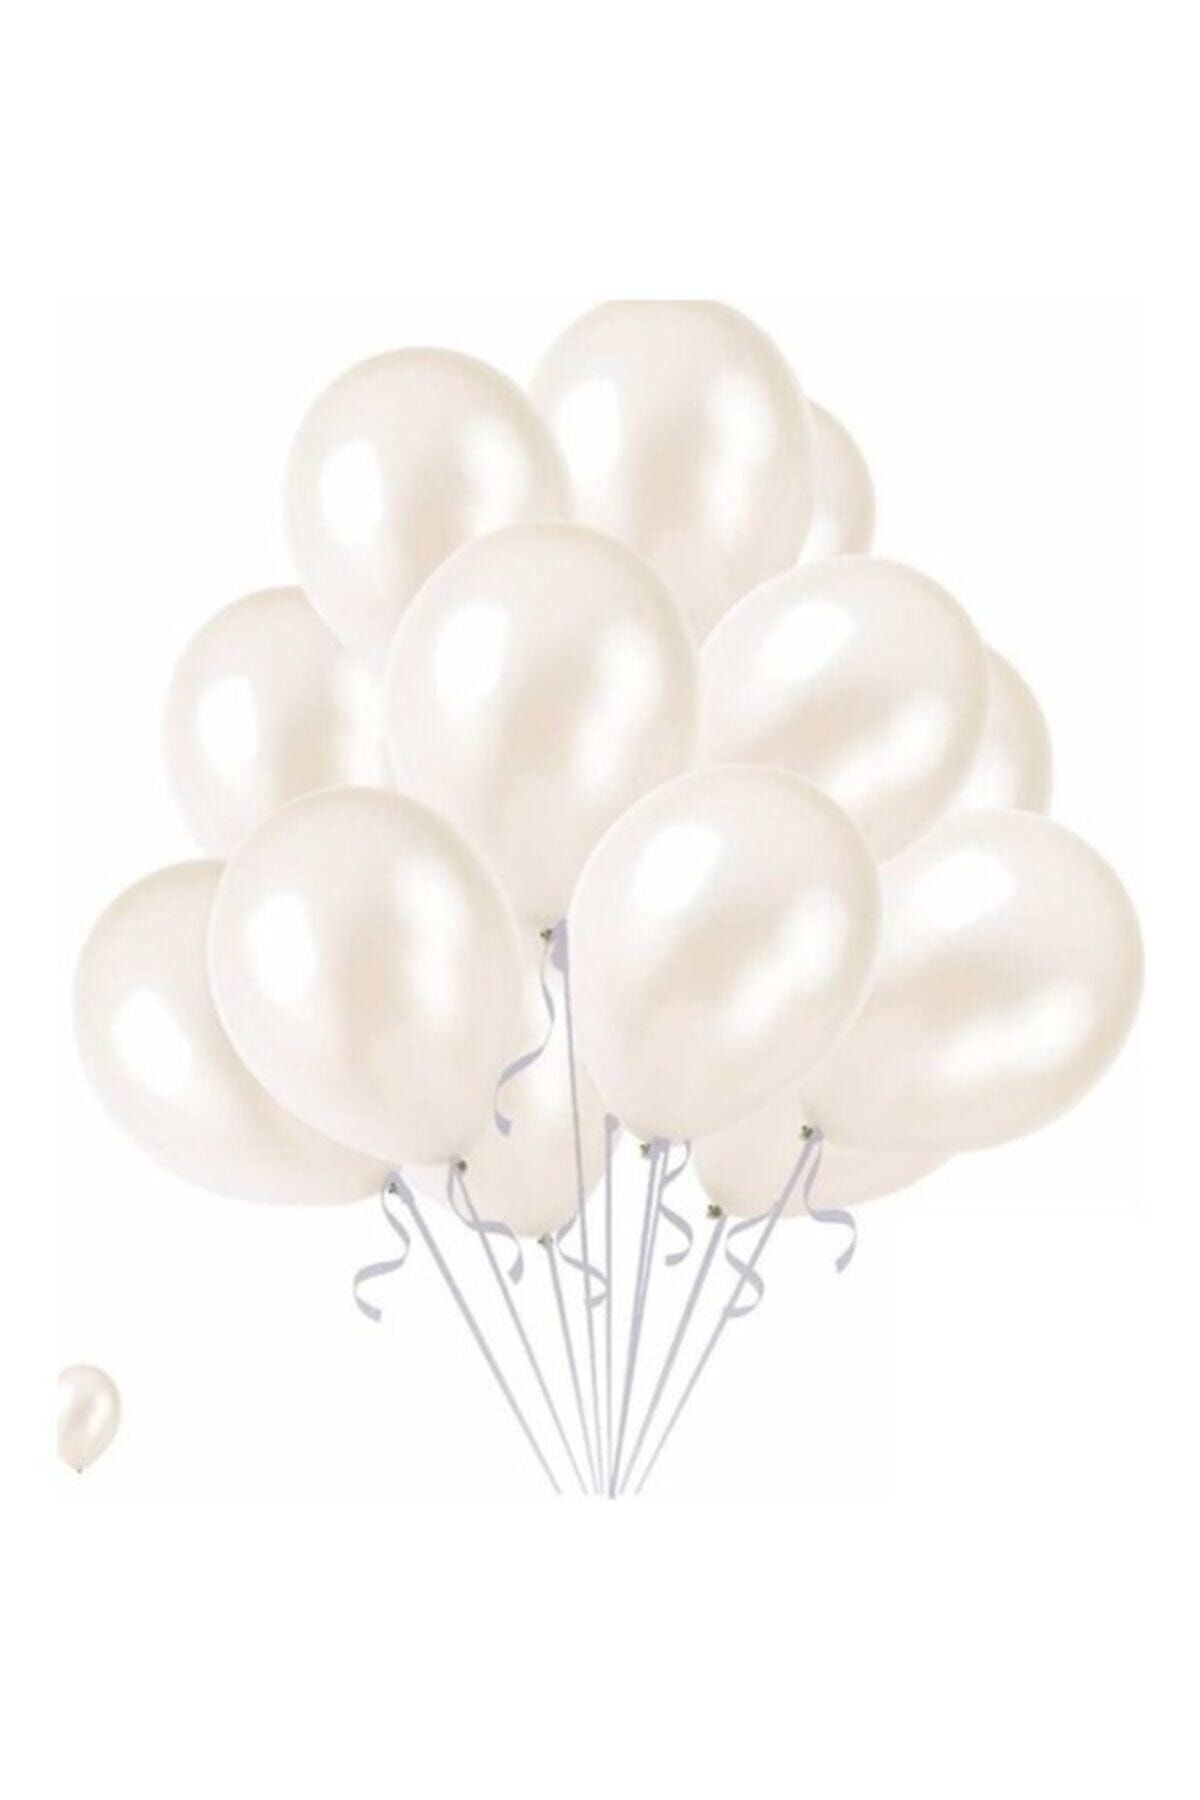 BalonEvi Beyaz Metalik Balon 10lu